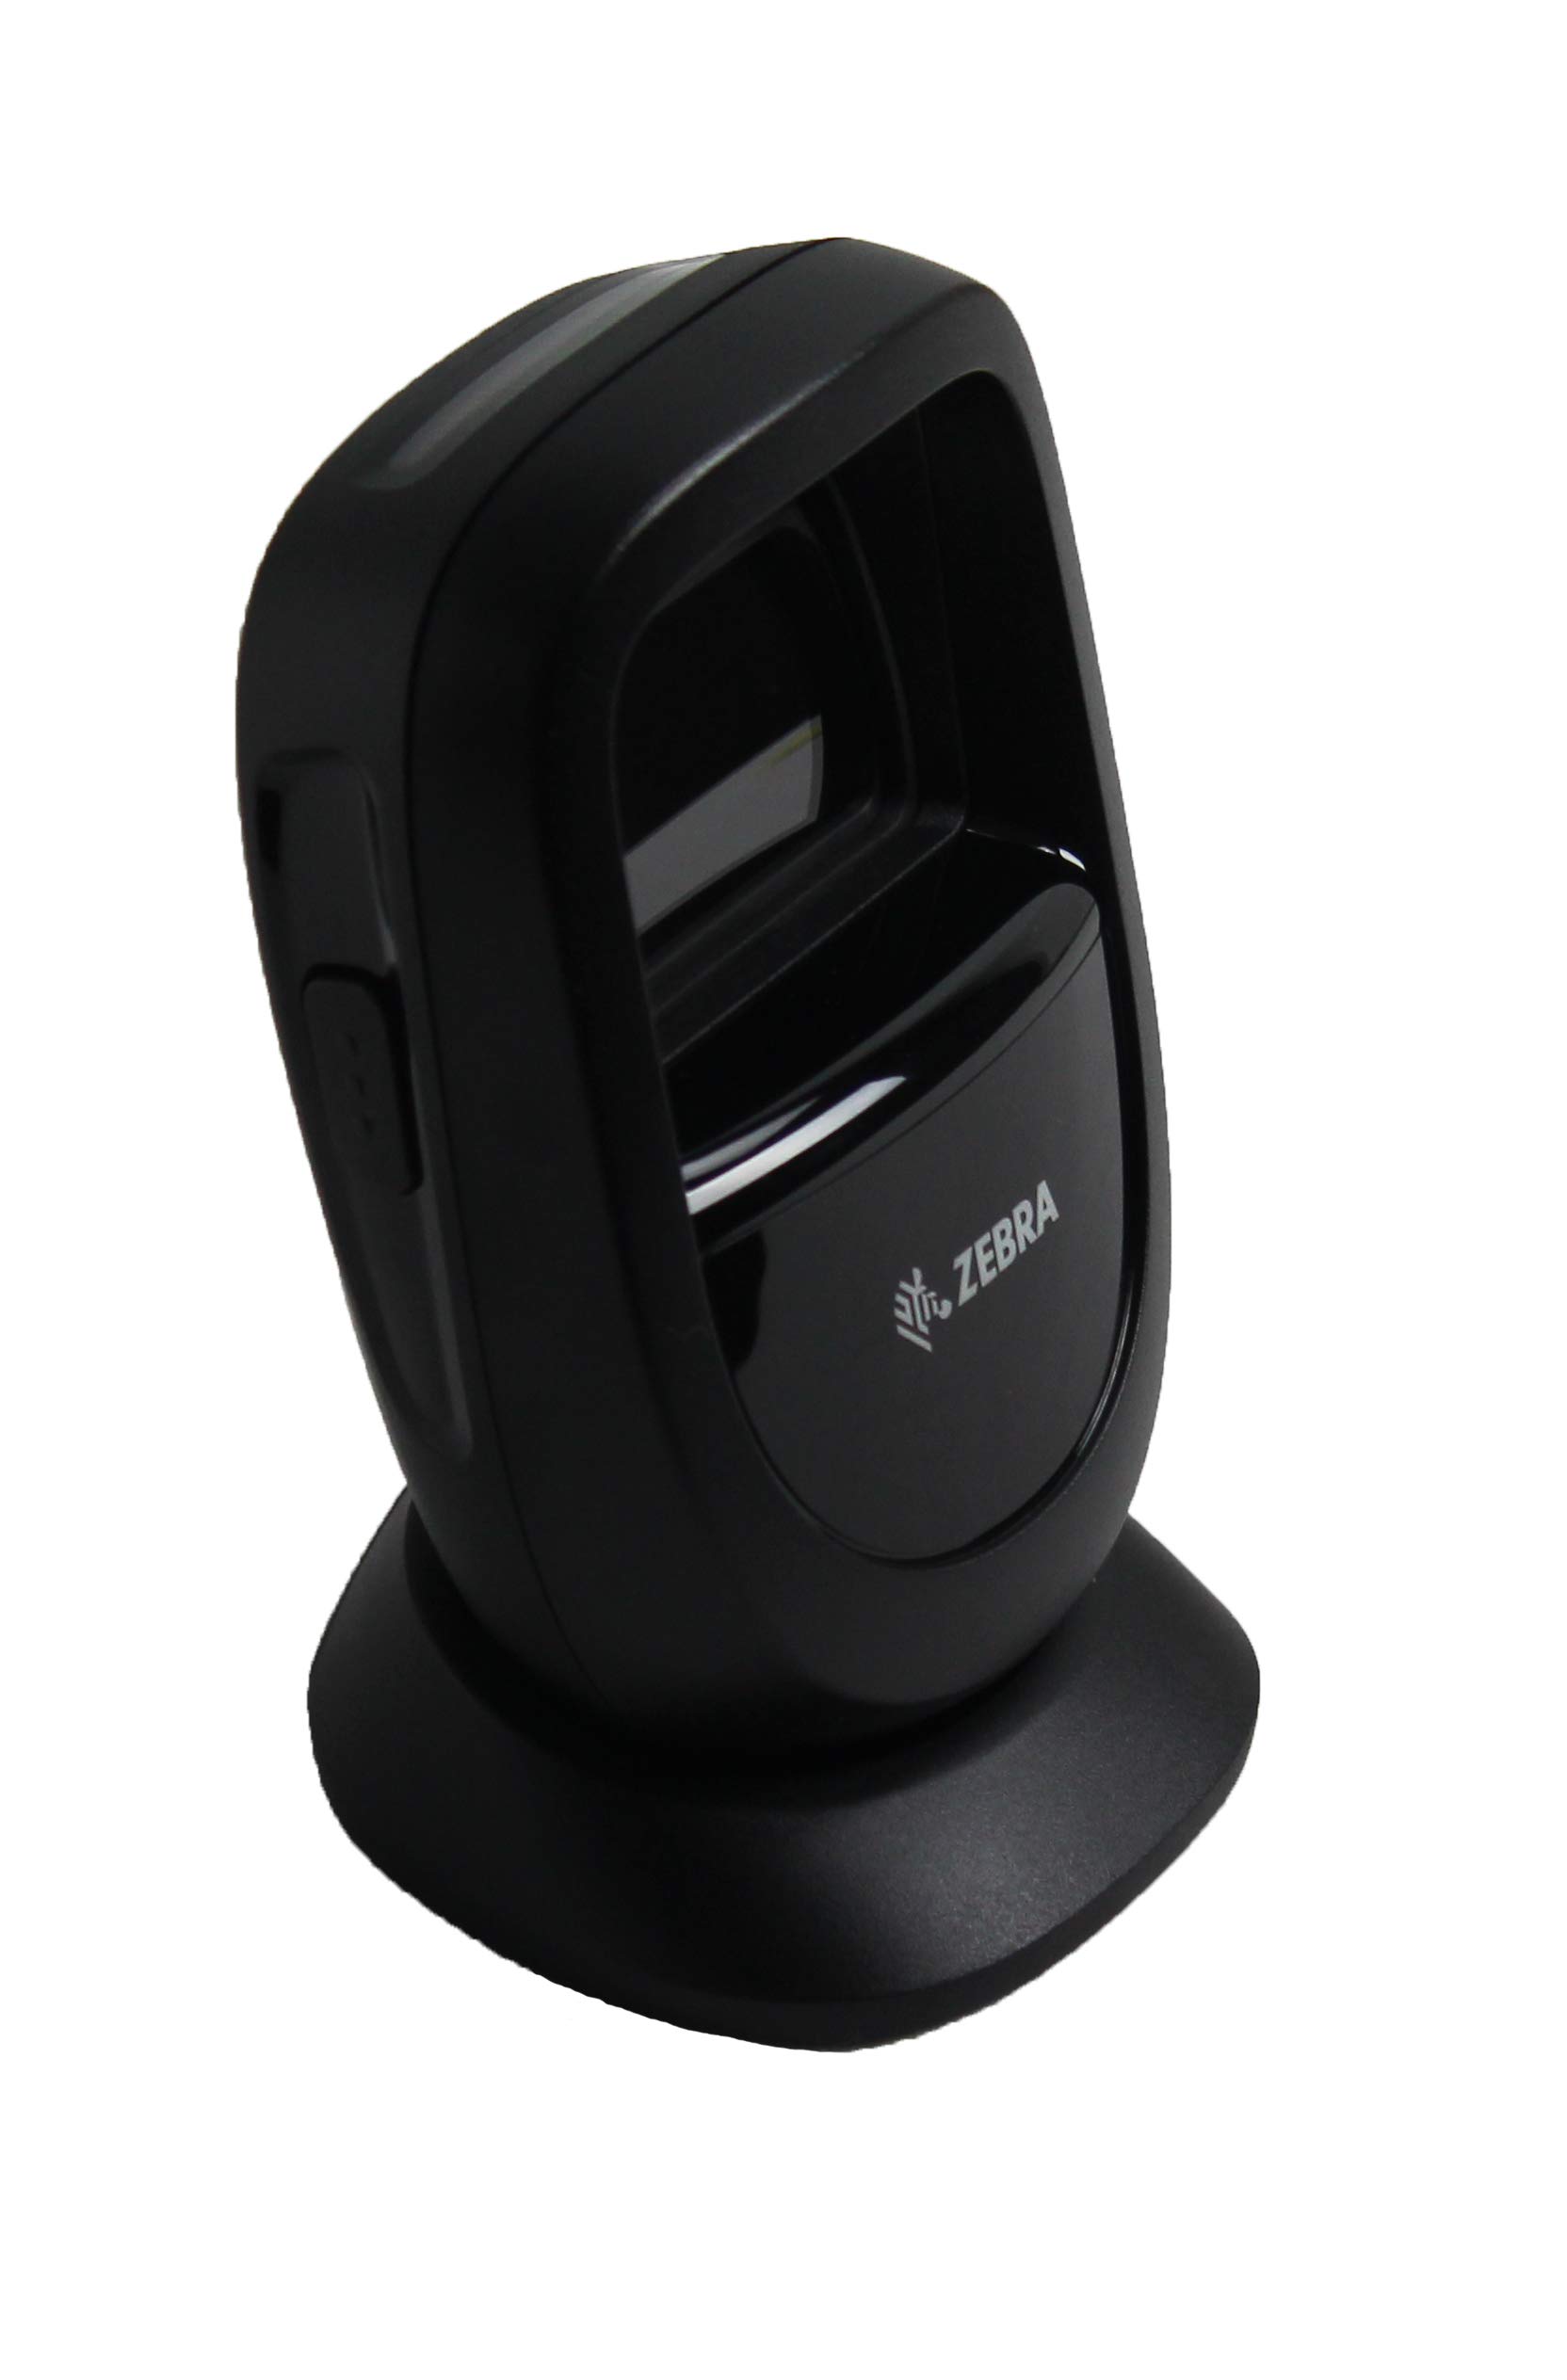 ZEBRA ENTERPRISE Zebra DS9308 Handheld Scanner with USB...